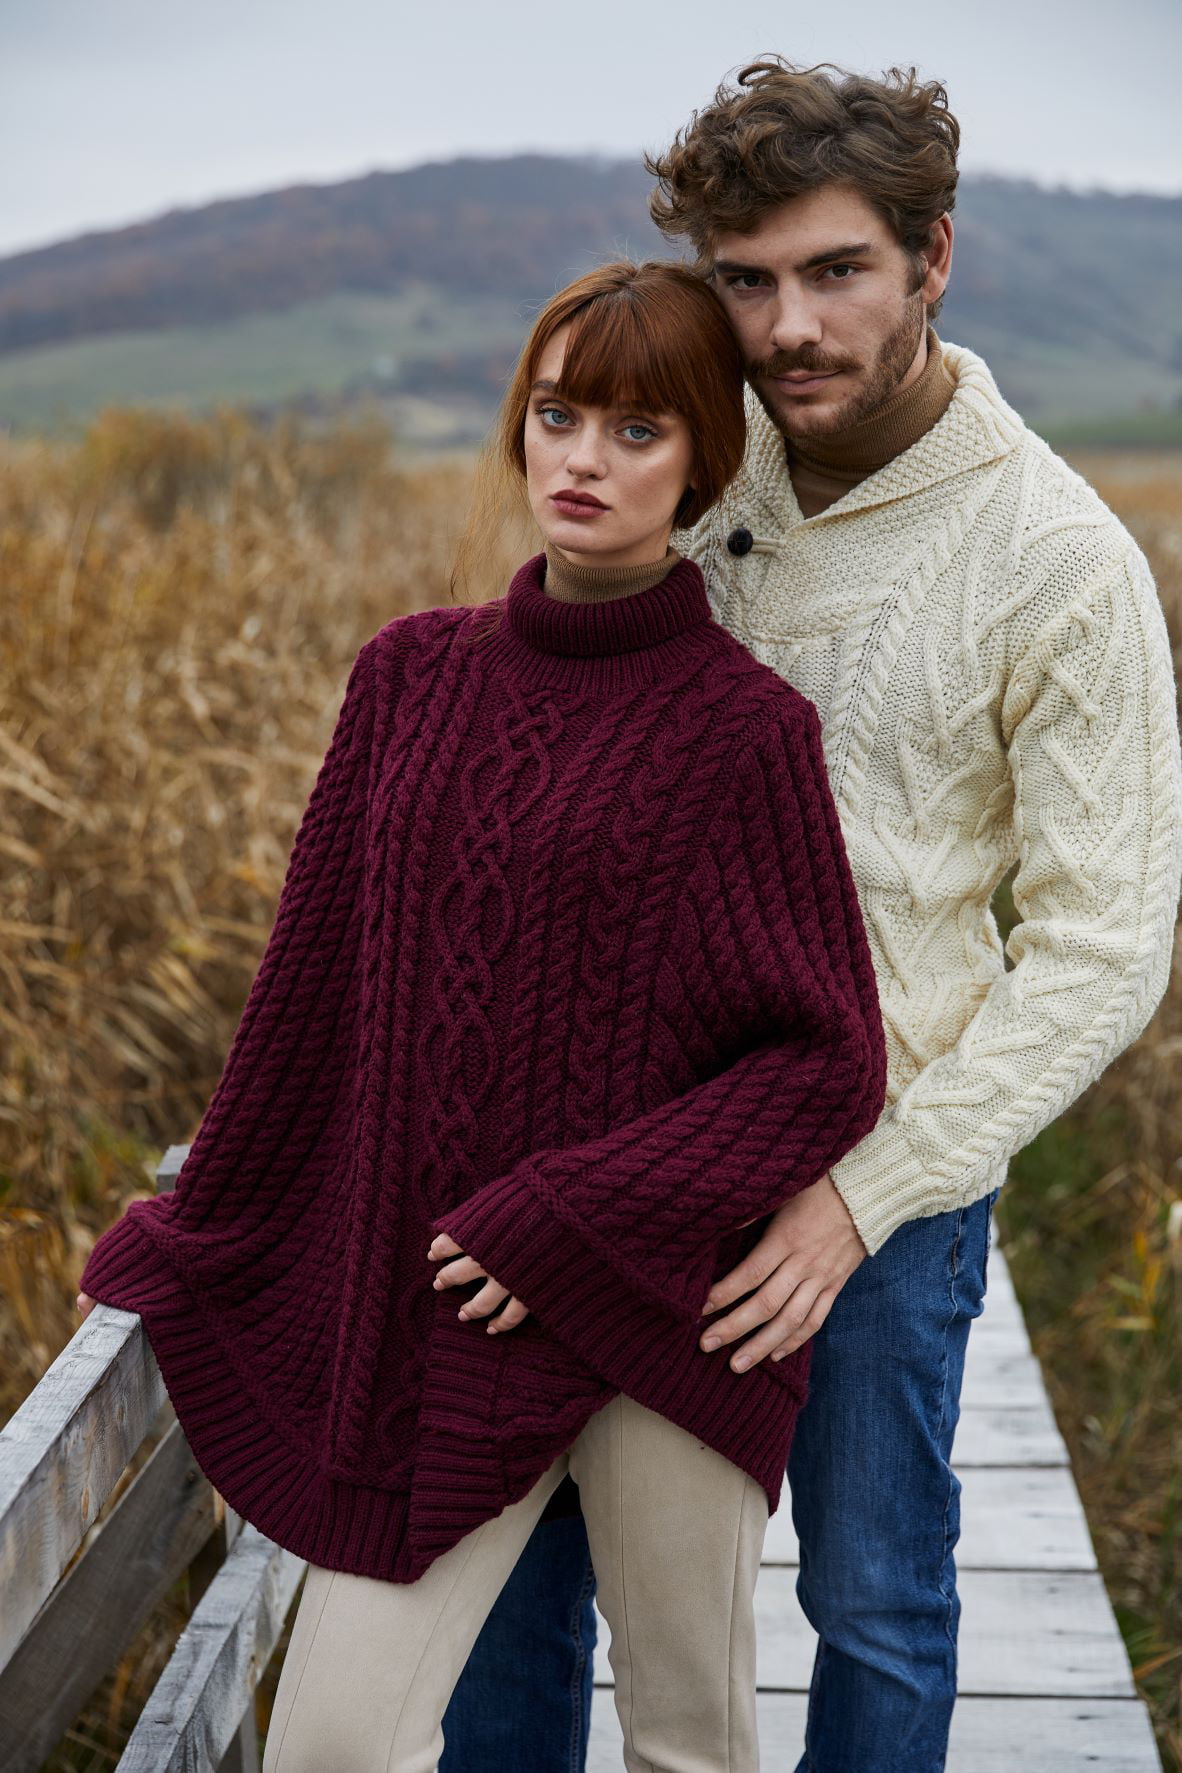 Irish Wool Sweater for Men - Blue (Select Size:: Medium)